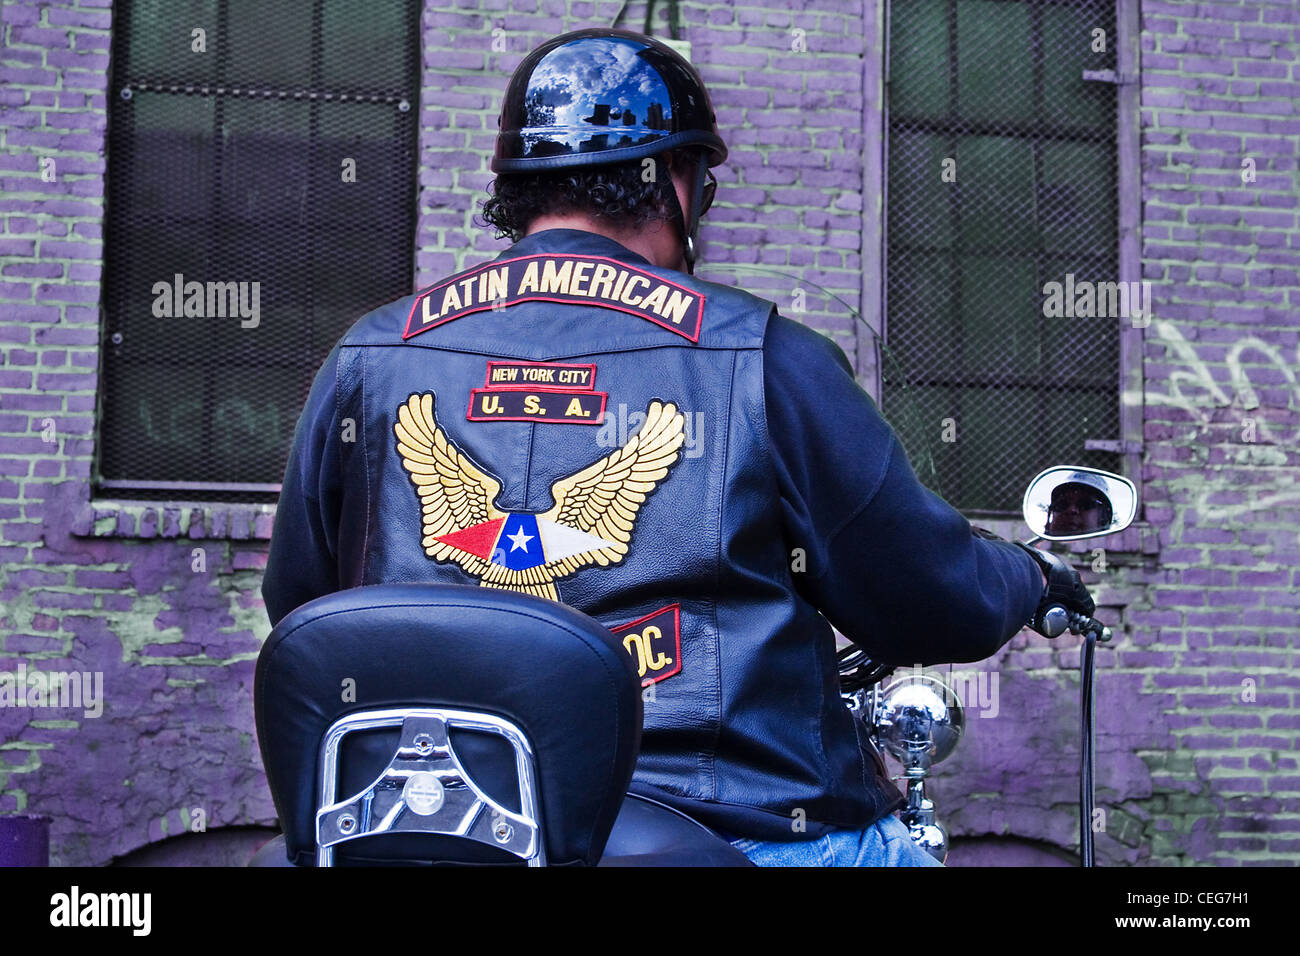 Latin American Biker, New York City Stock Photo